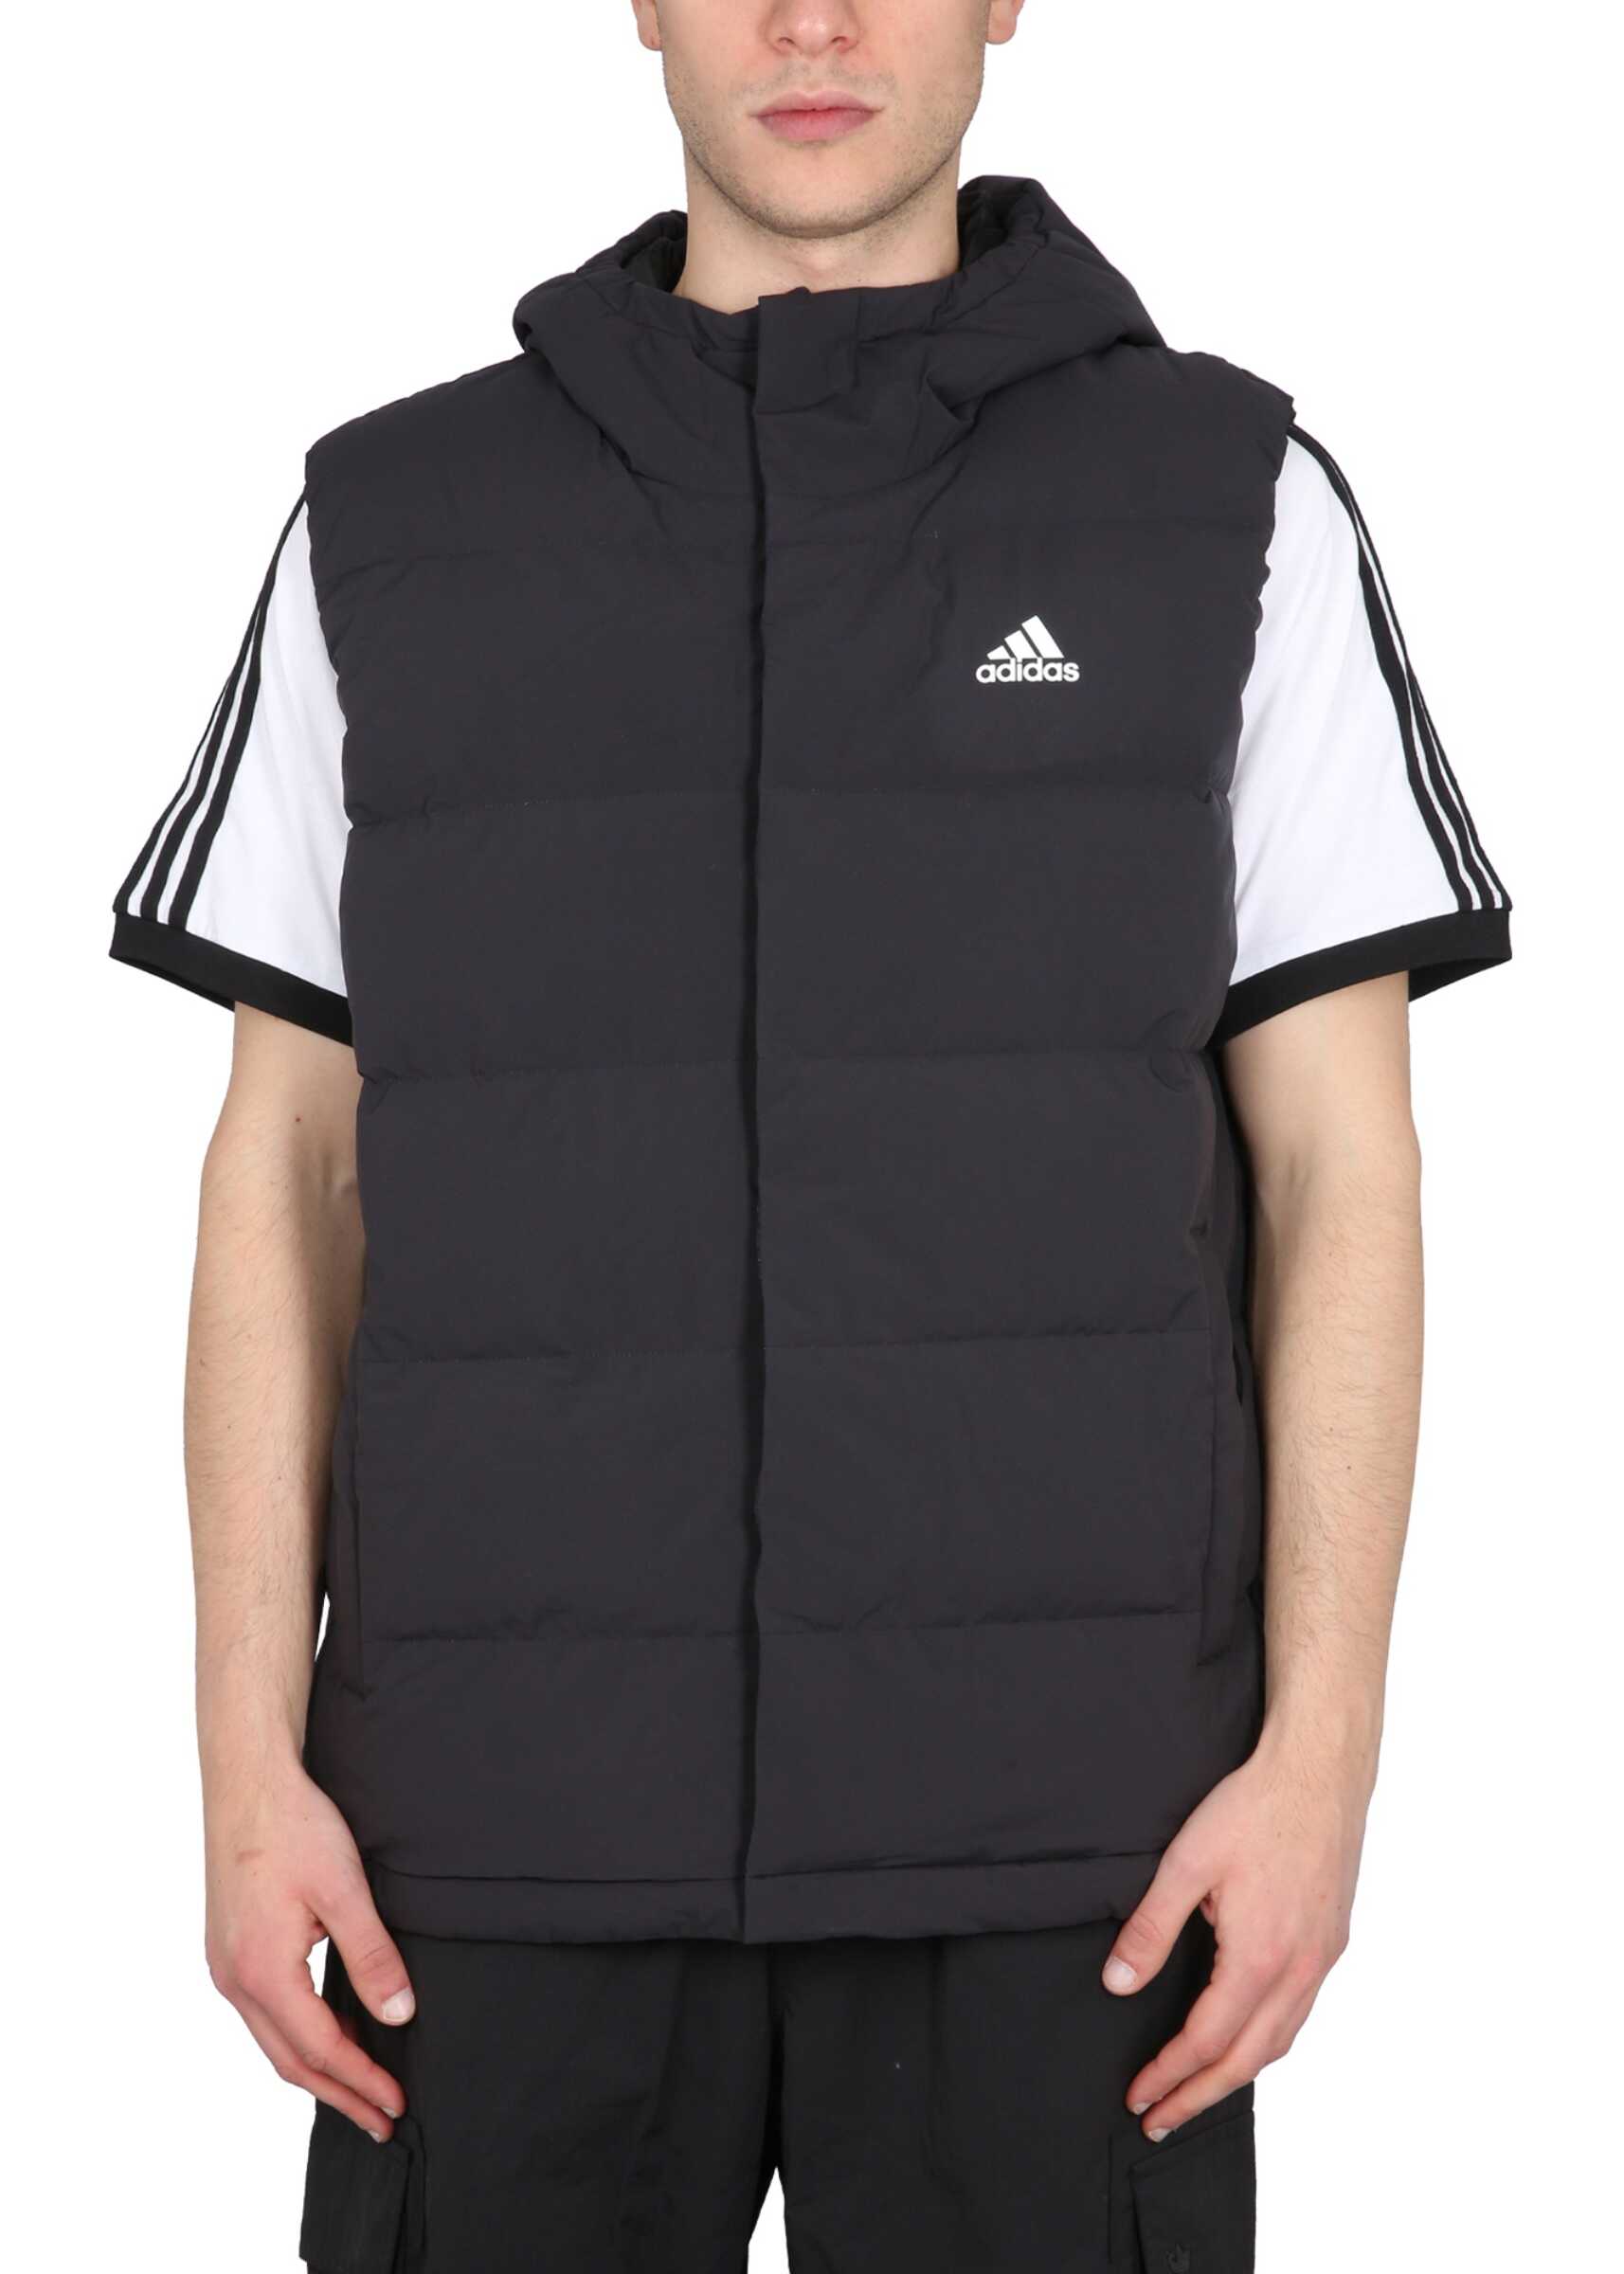 adidas Originals Helionic Vest. BLACK ADIDAS